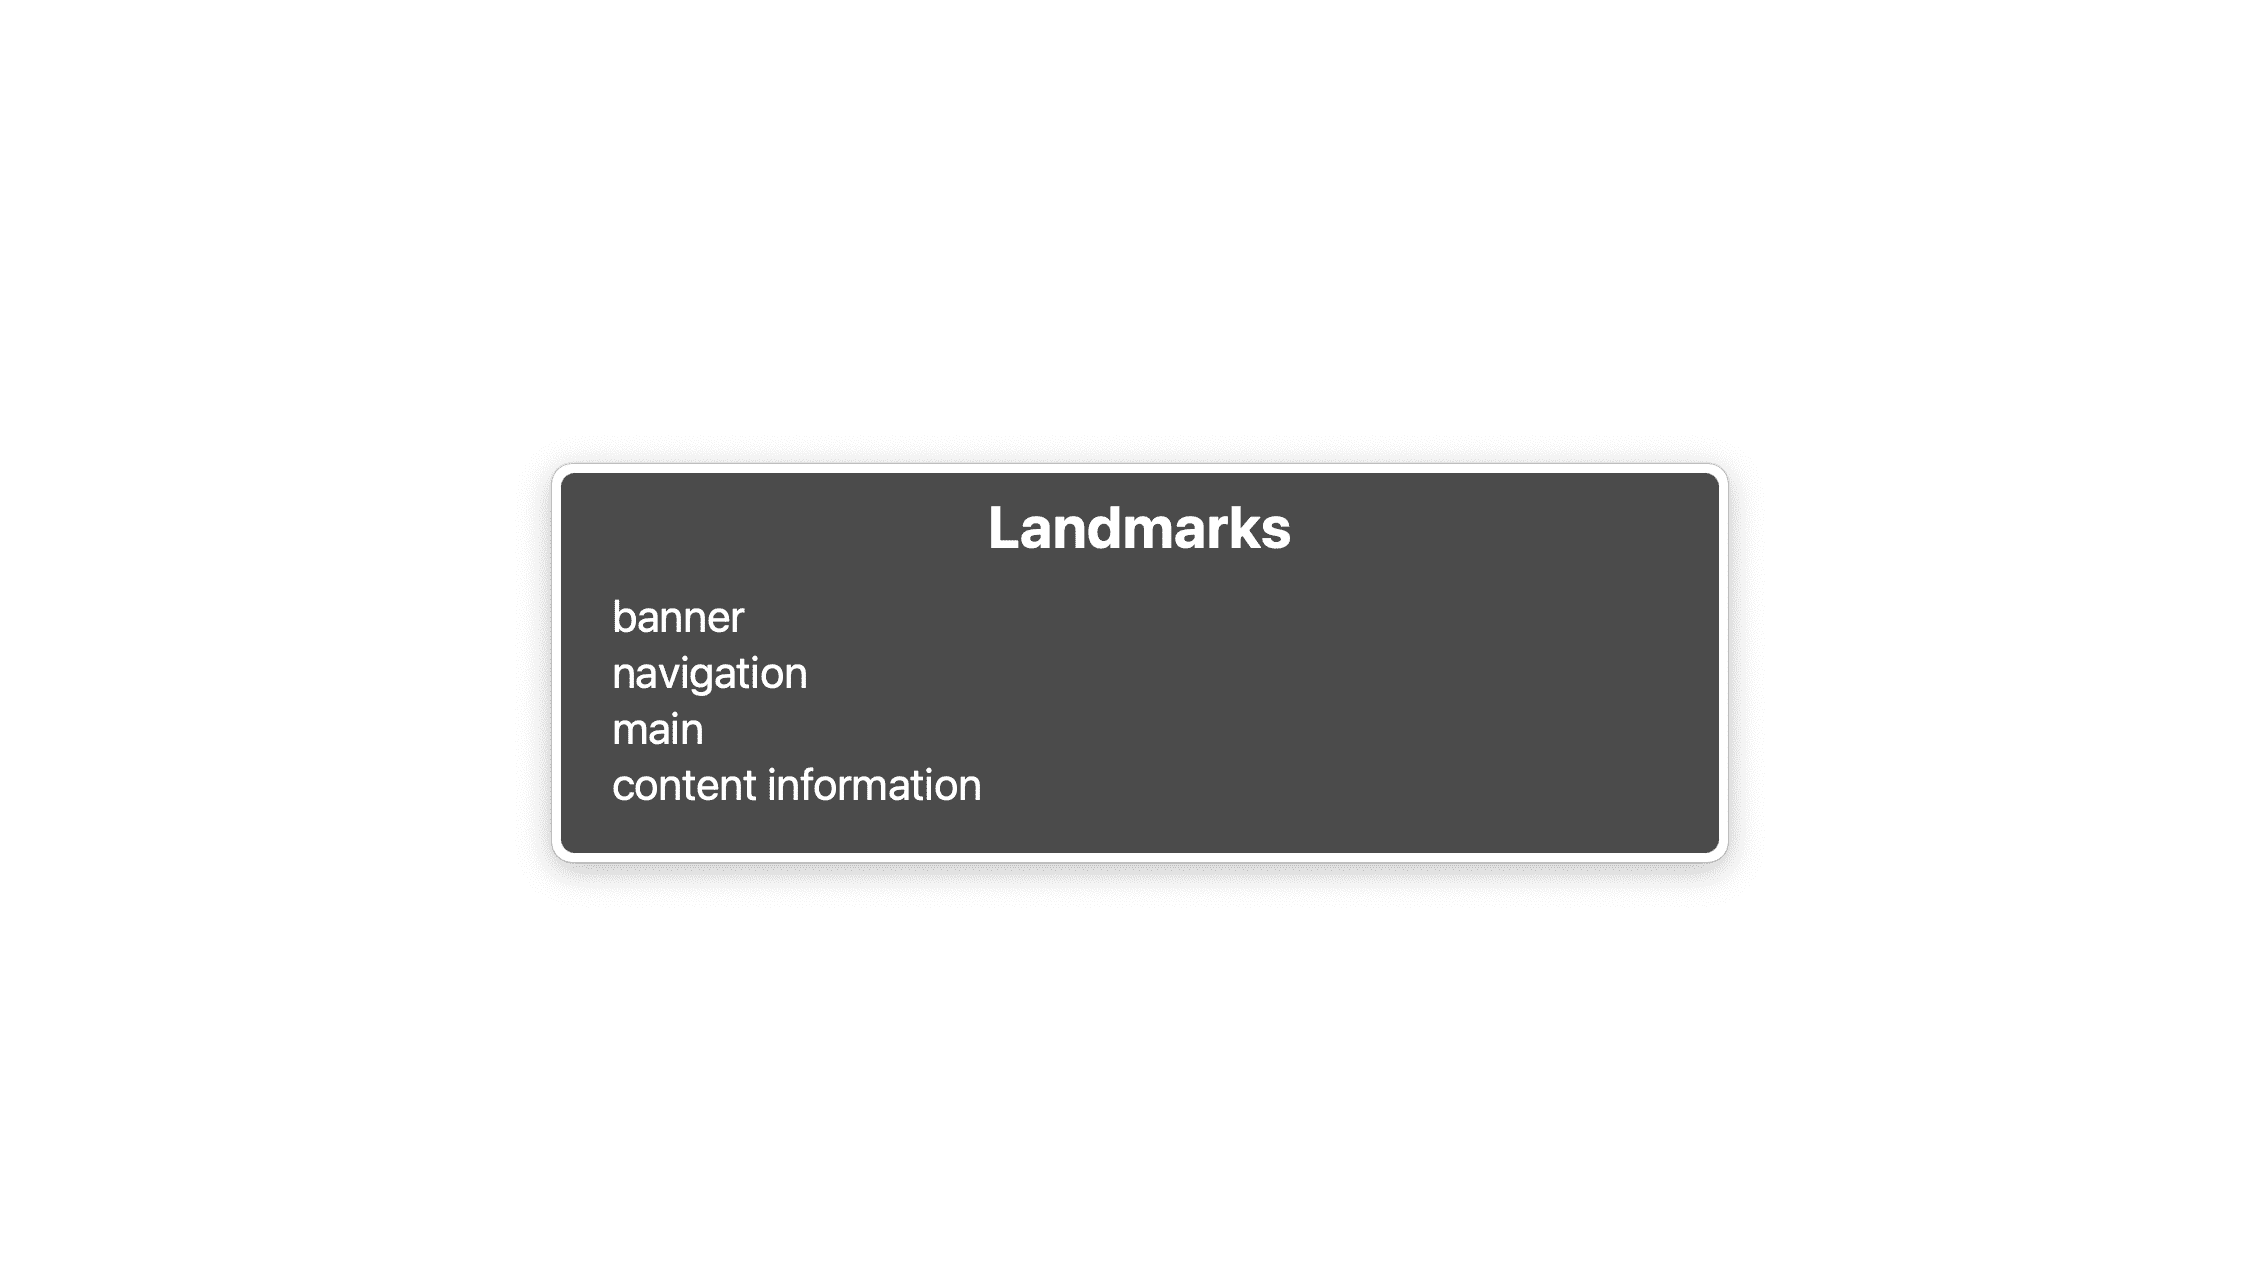 A list of four landmarks: banner, navigation, main, content information.